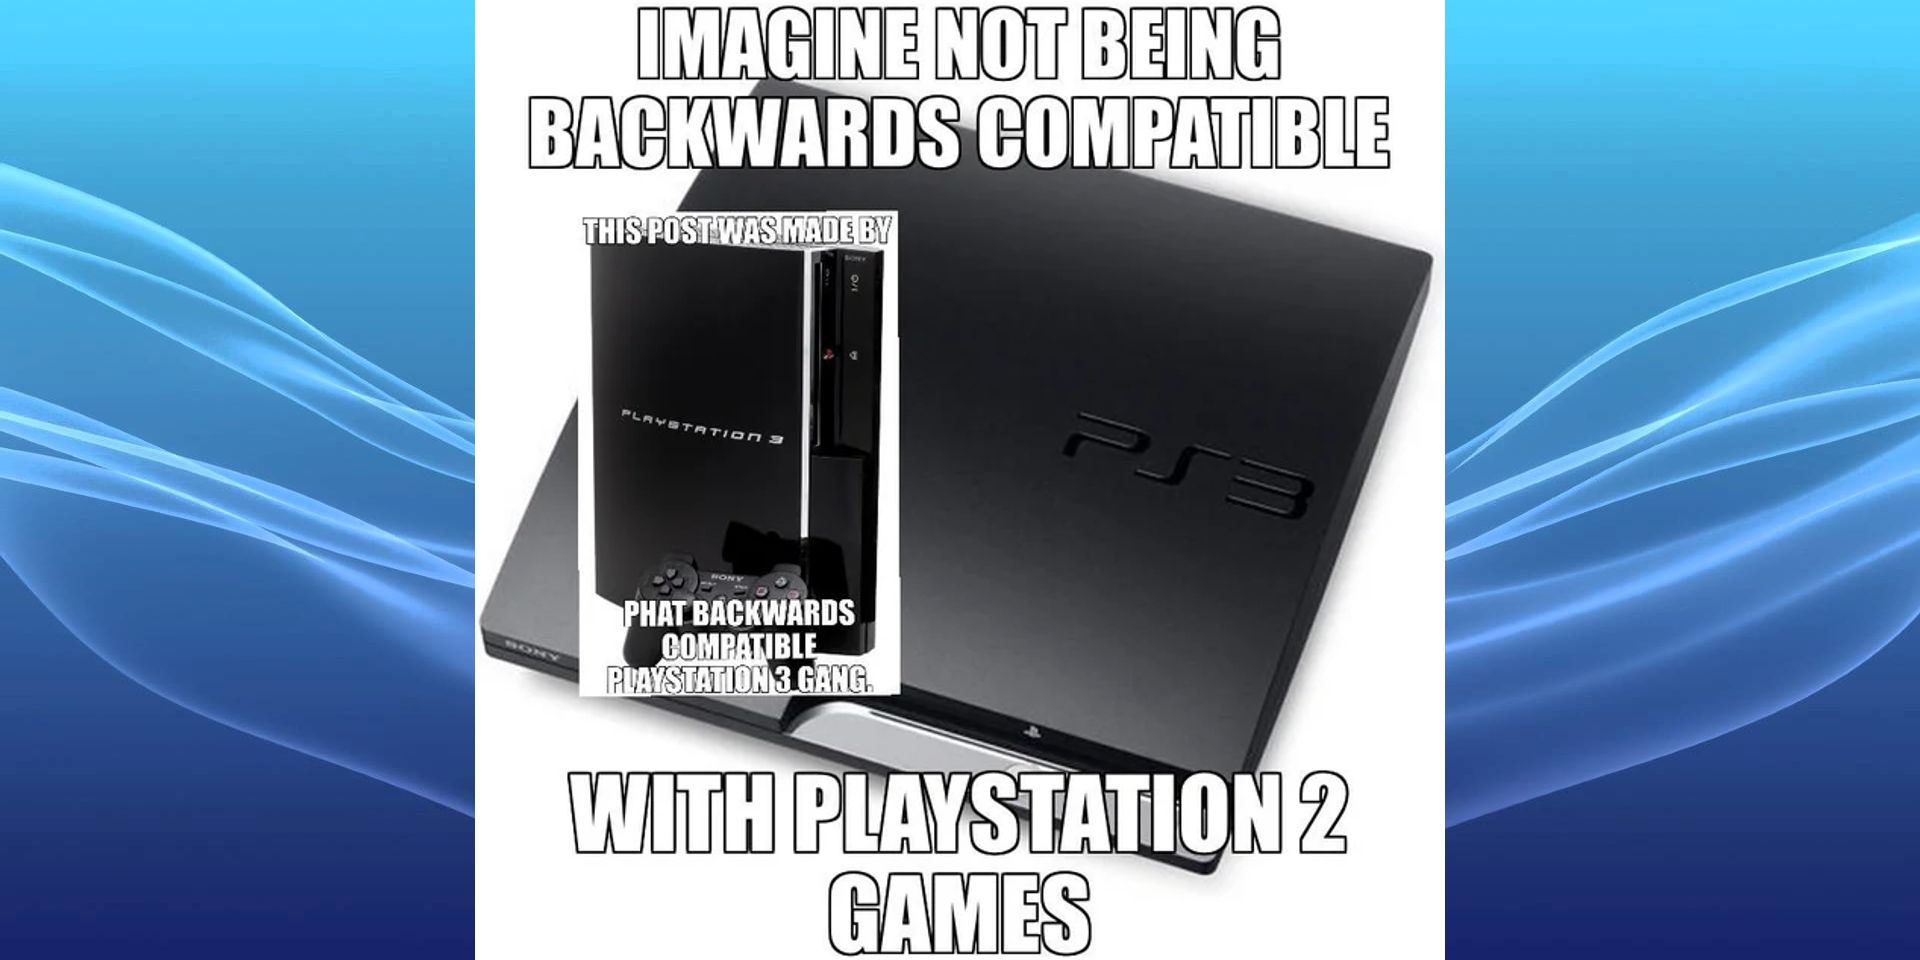 PS3 Backwards Compatibility Meme